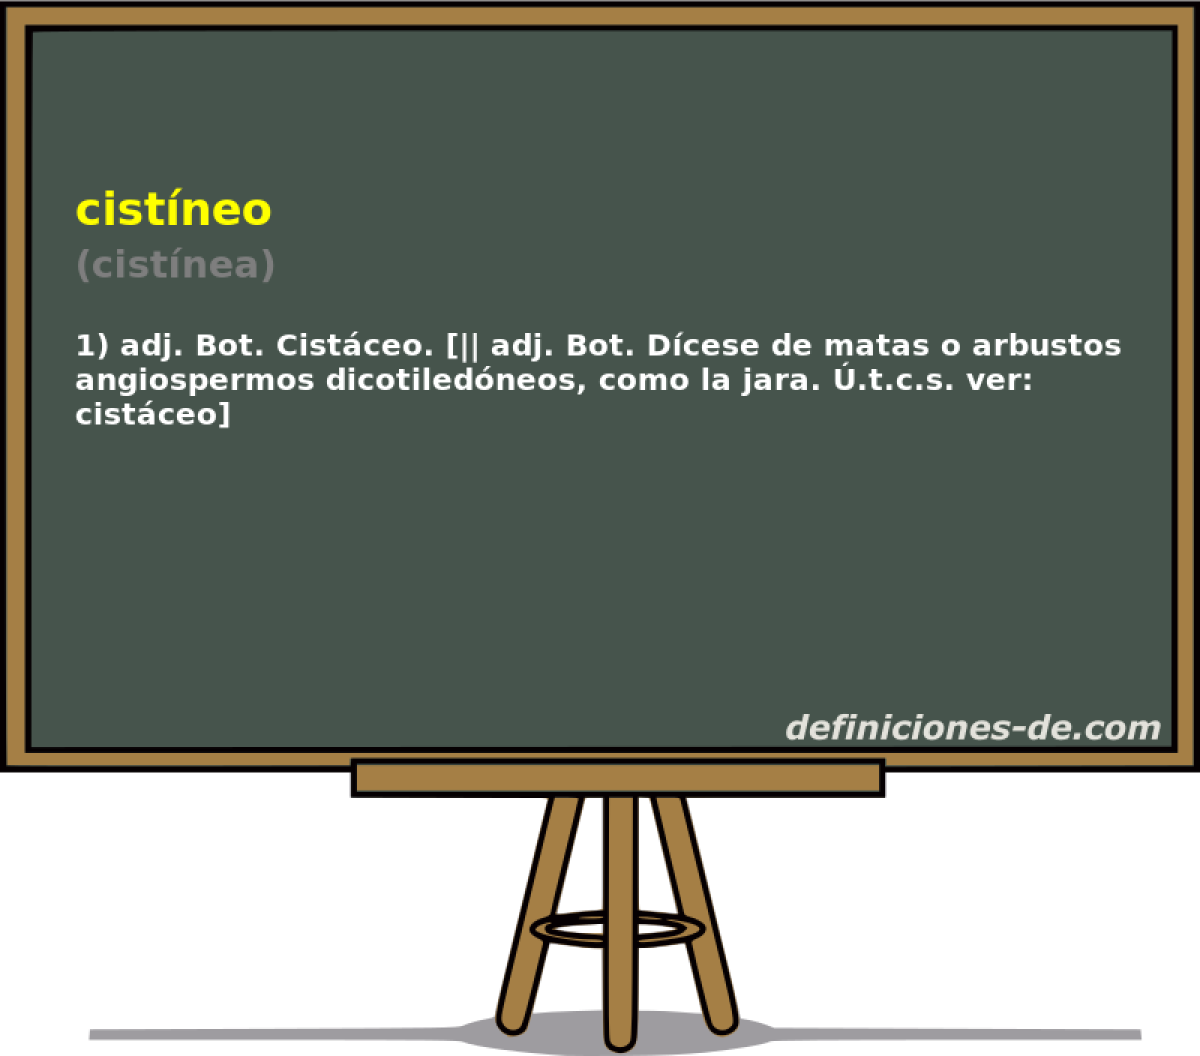 cistneo (cistnea)